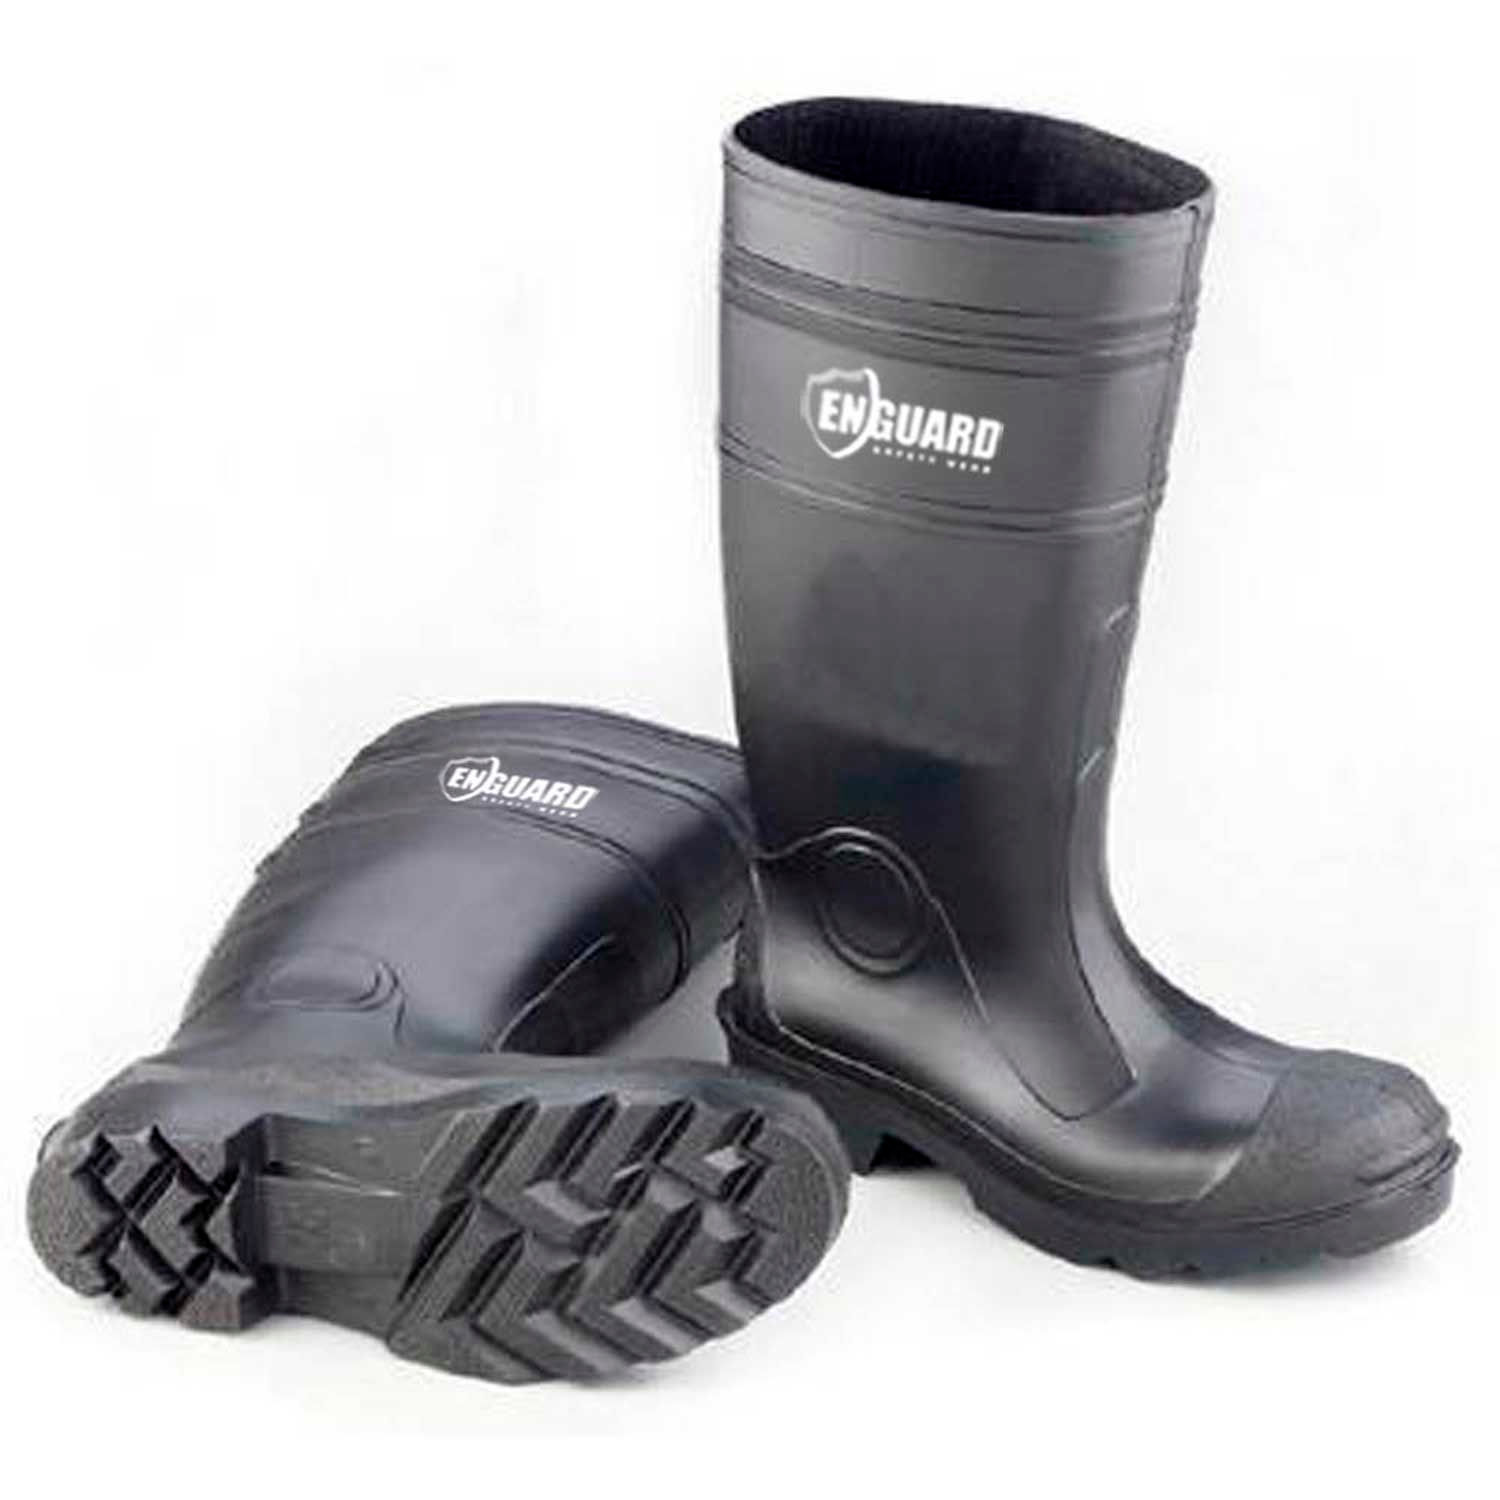 size 16 boots waterproof